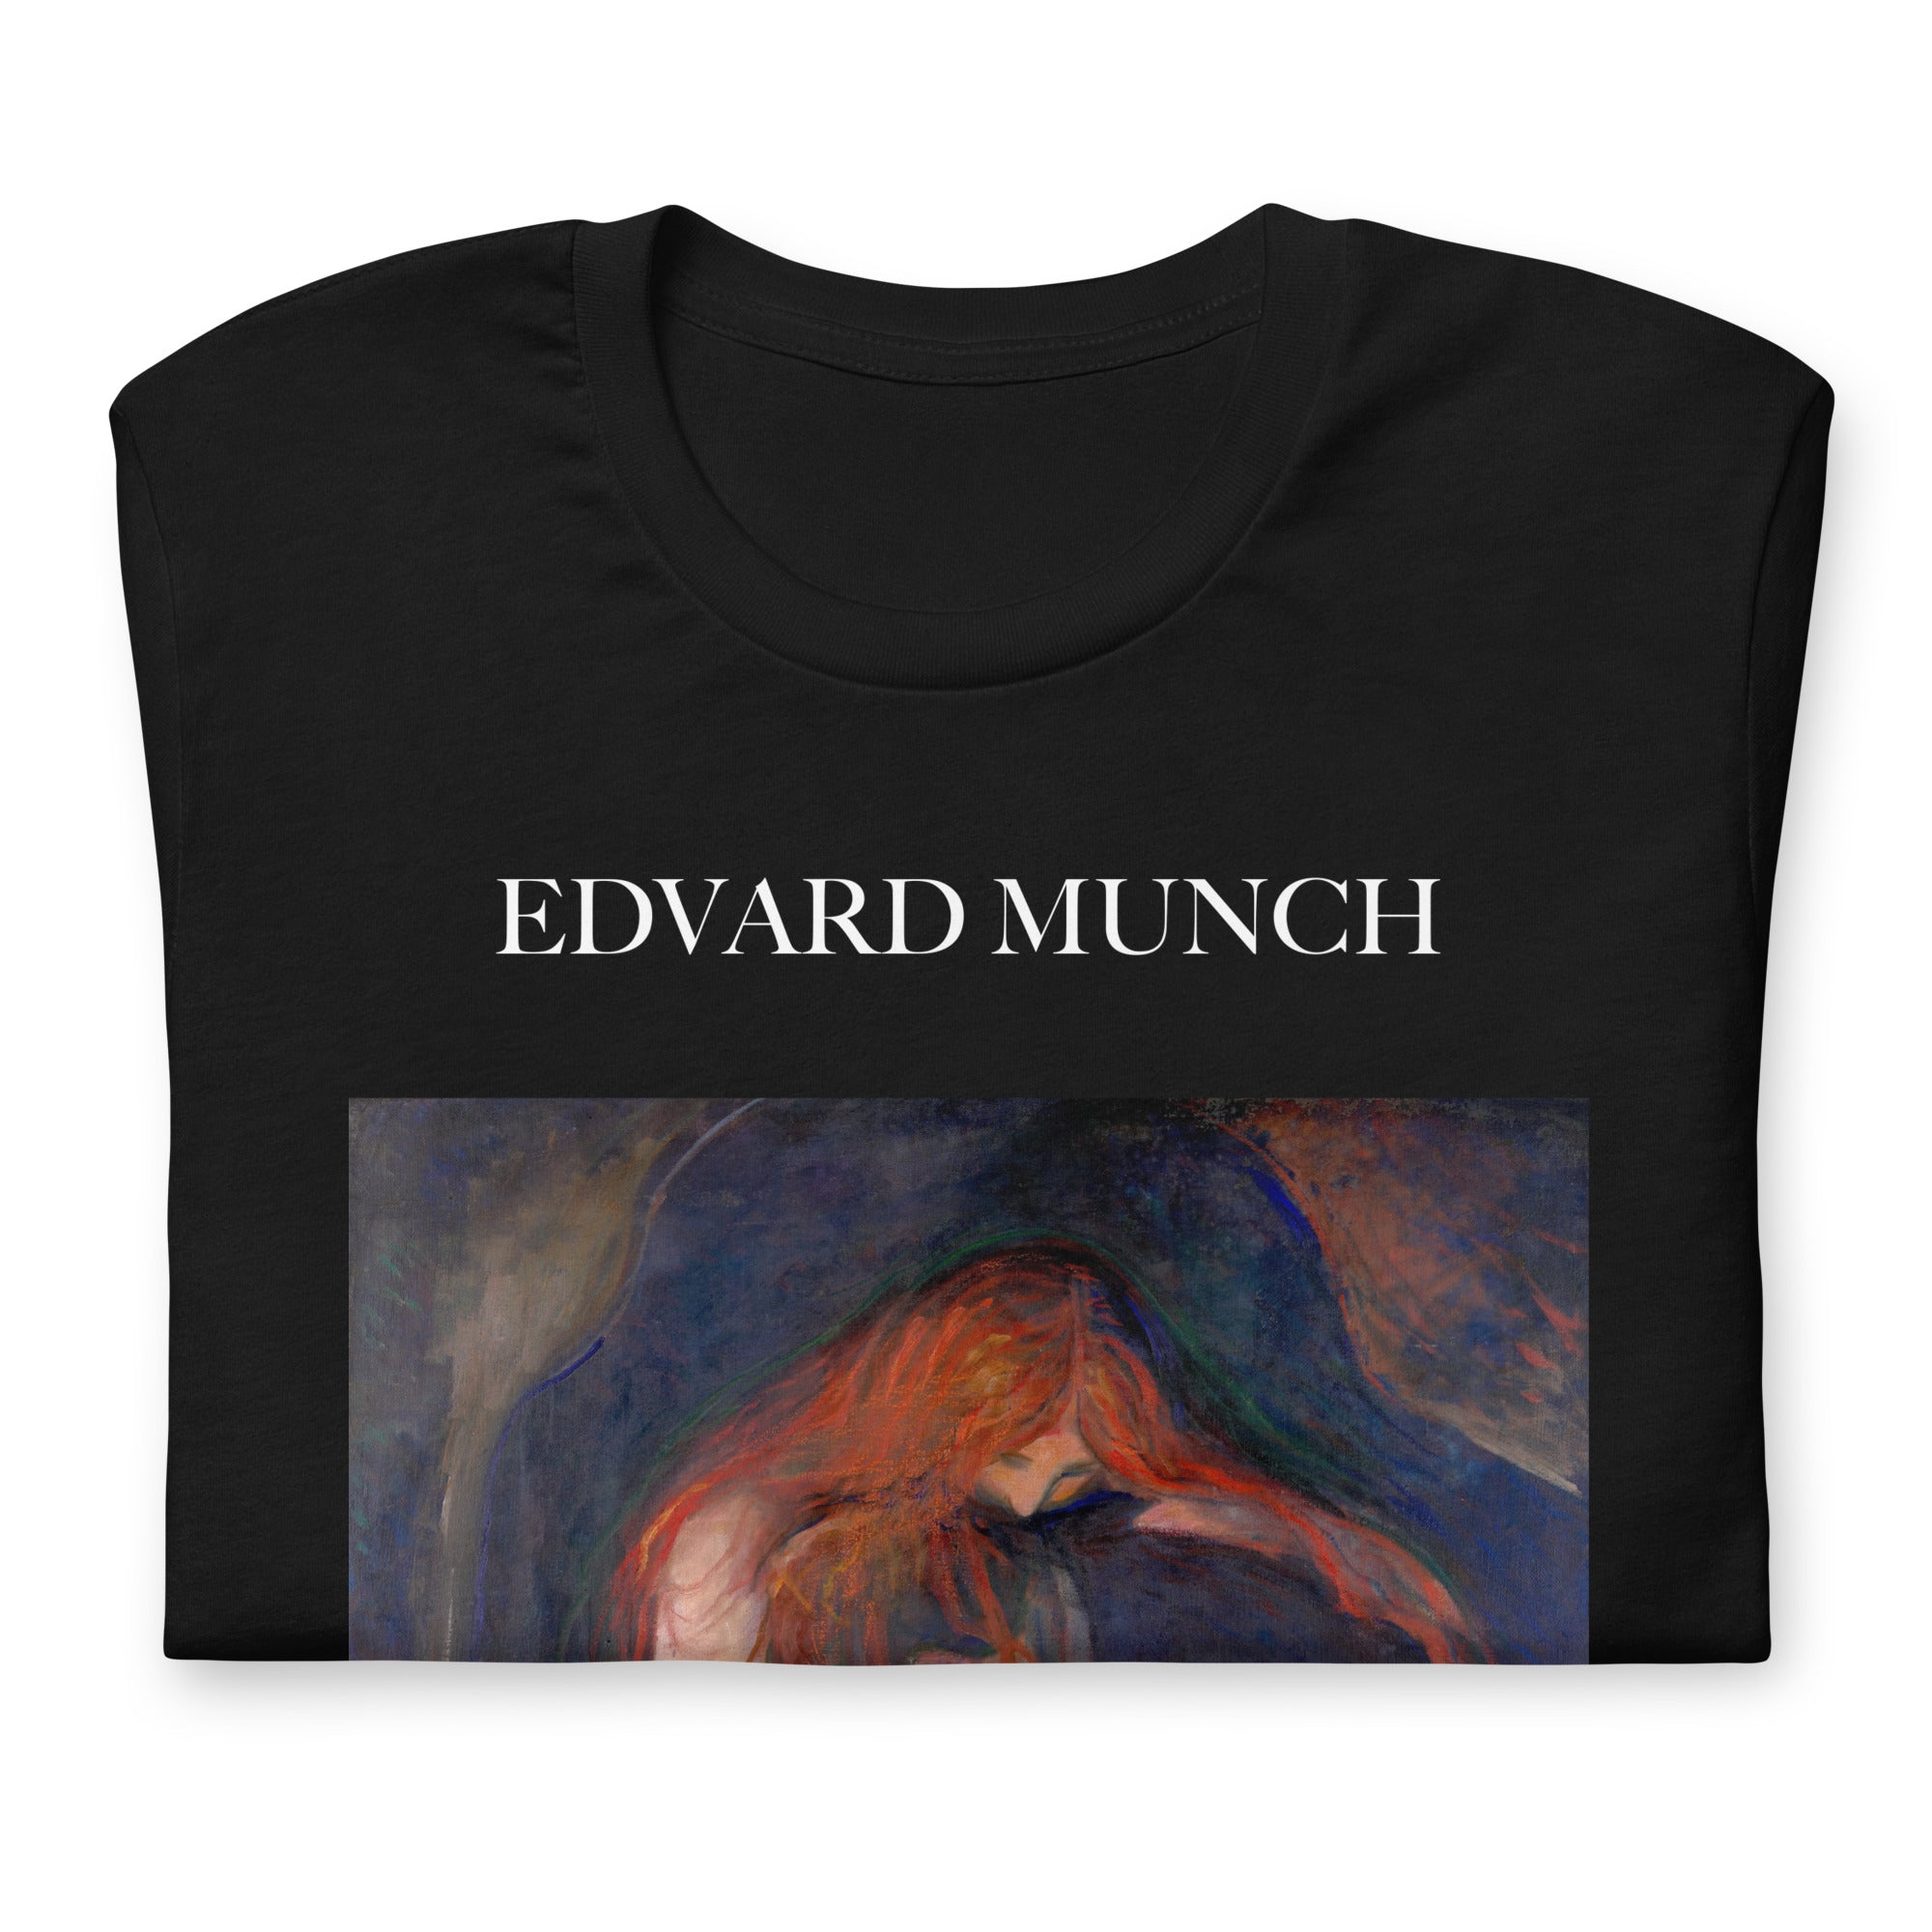 Edvard Munch 'Vampire' Famous Painting T-Shirt | Unisex Classic Art Tee